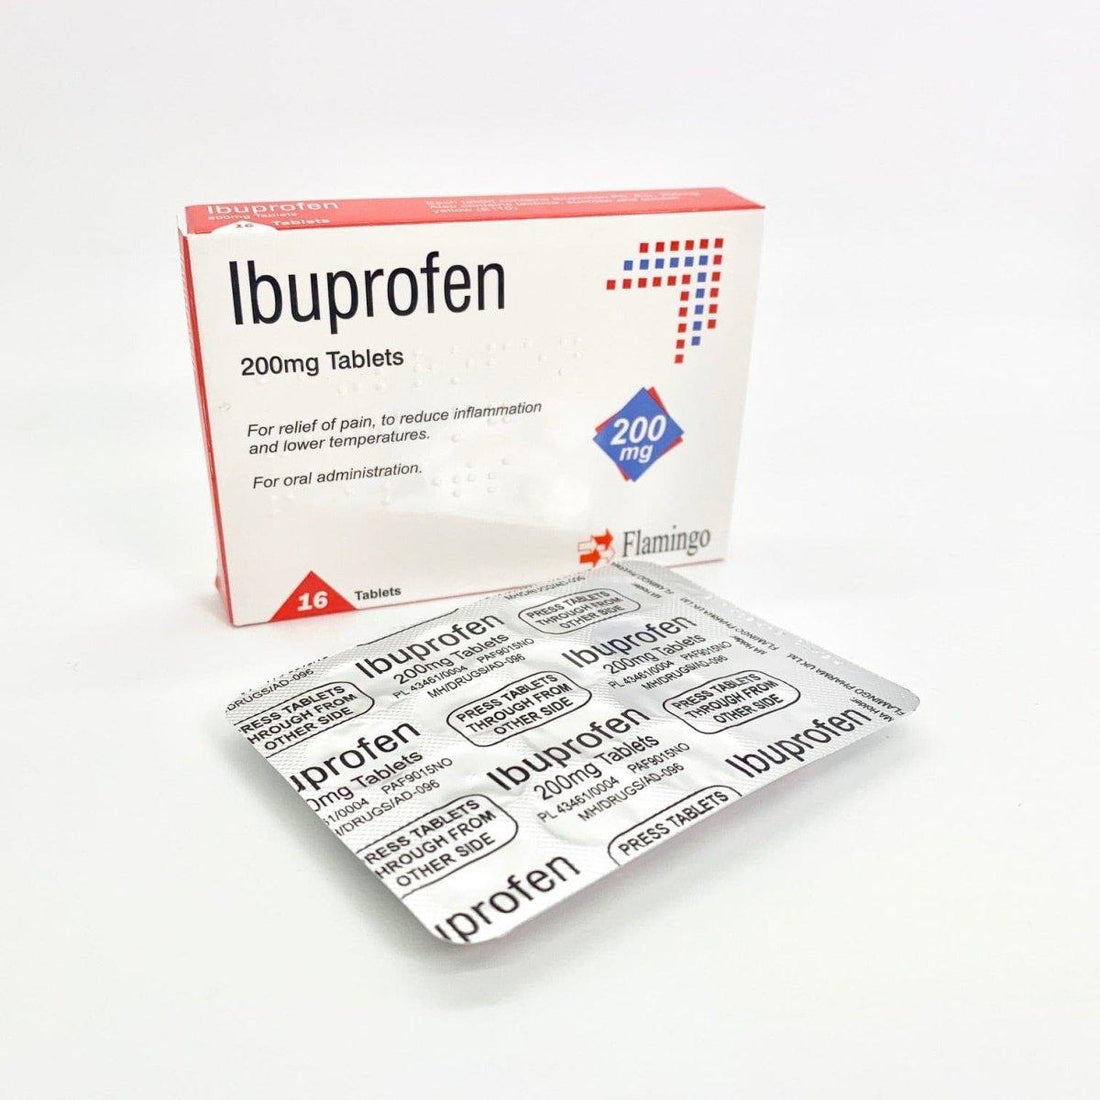 Ibuprofen 200mg tablets - Rightangled